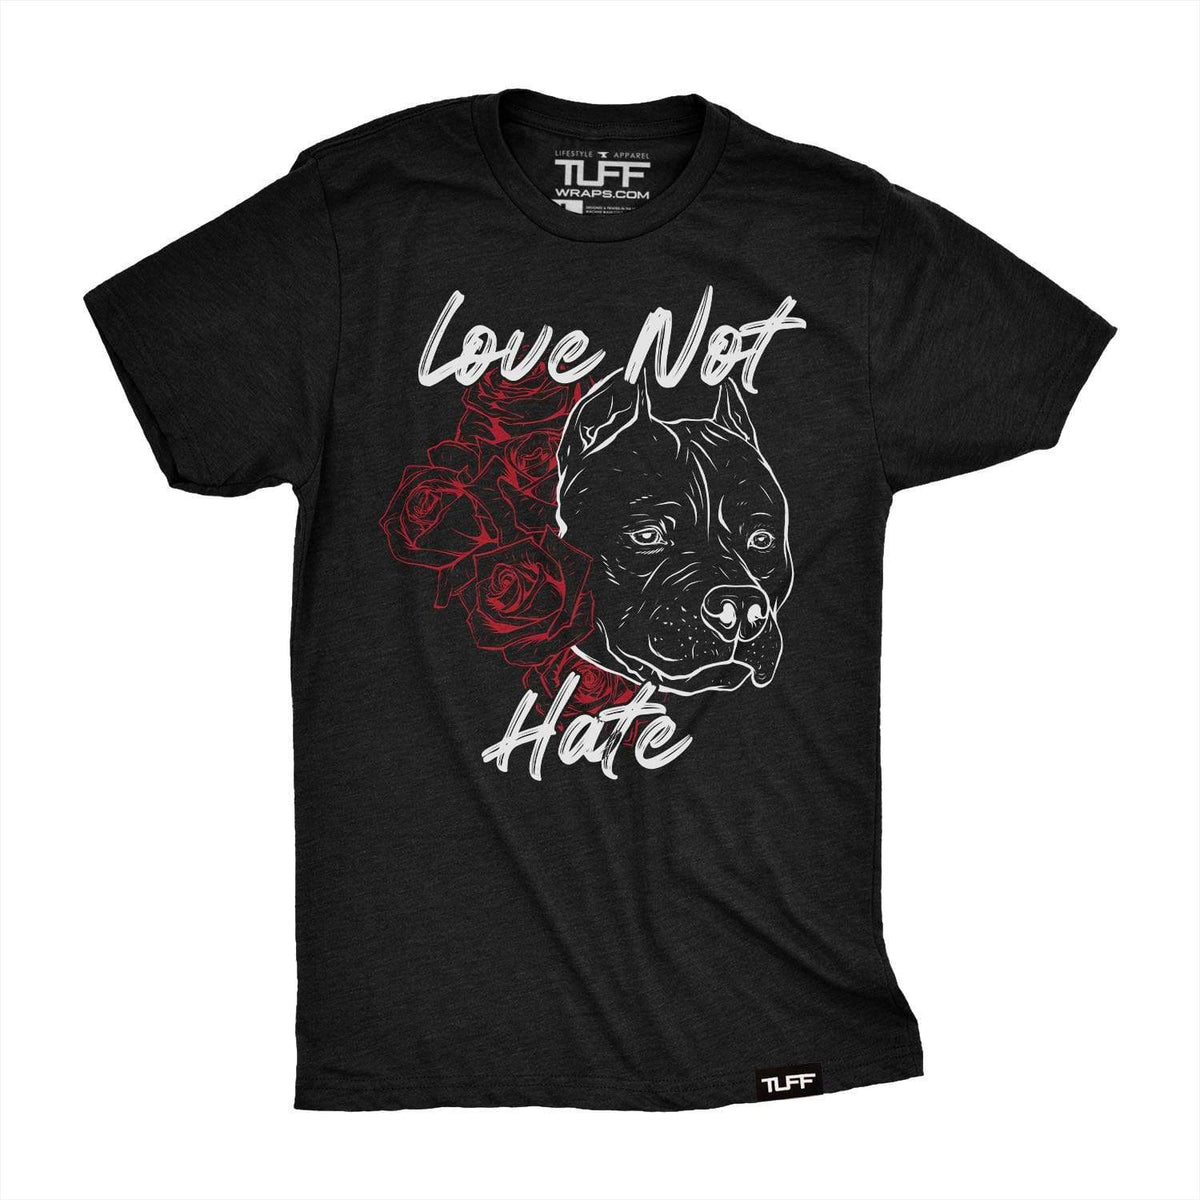 Love Not Hate Tee S / Black TuffWraps.com